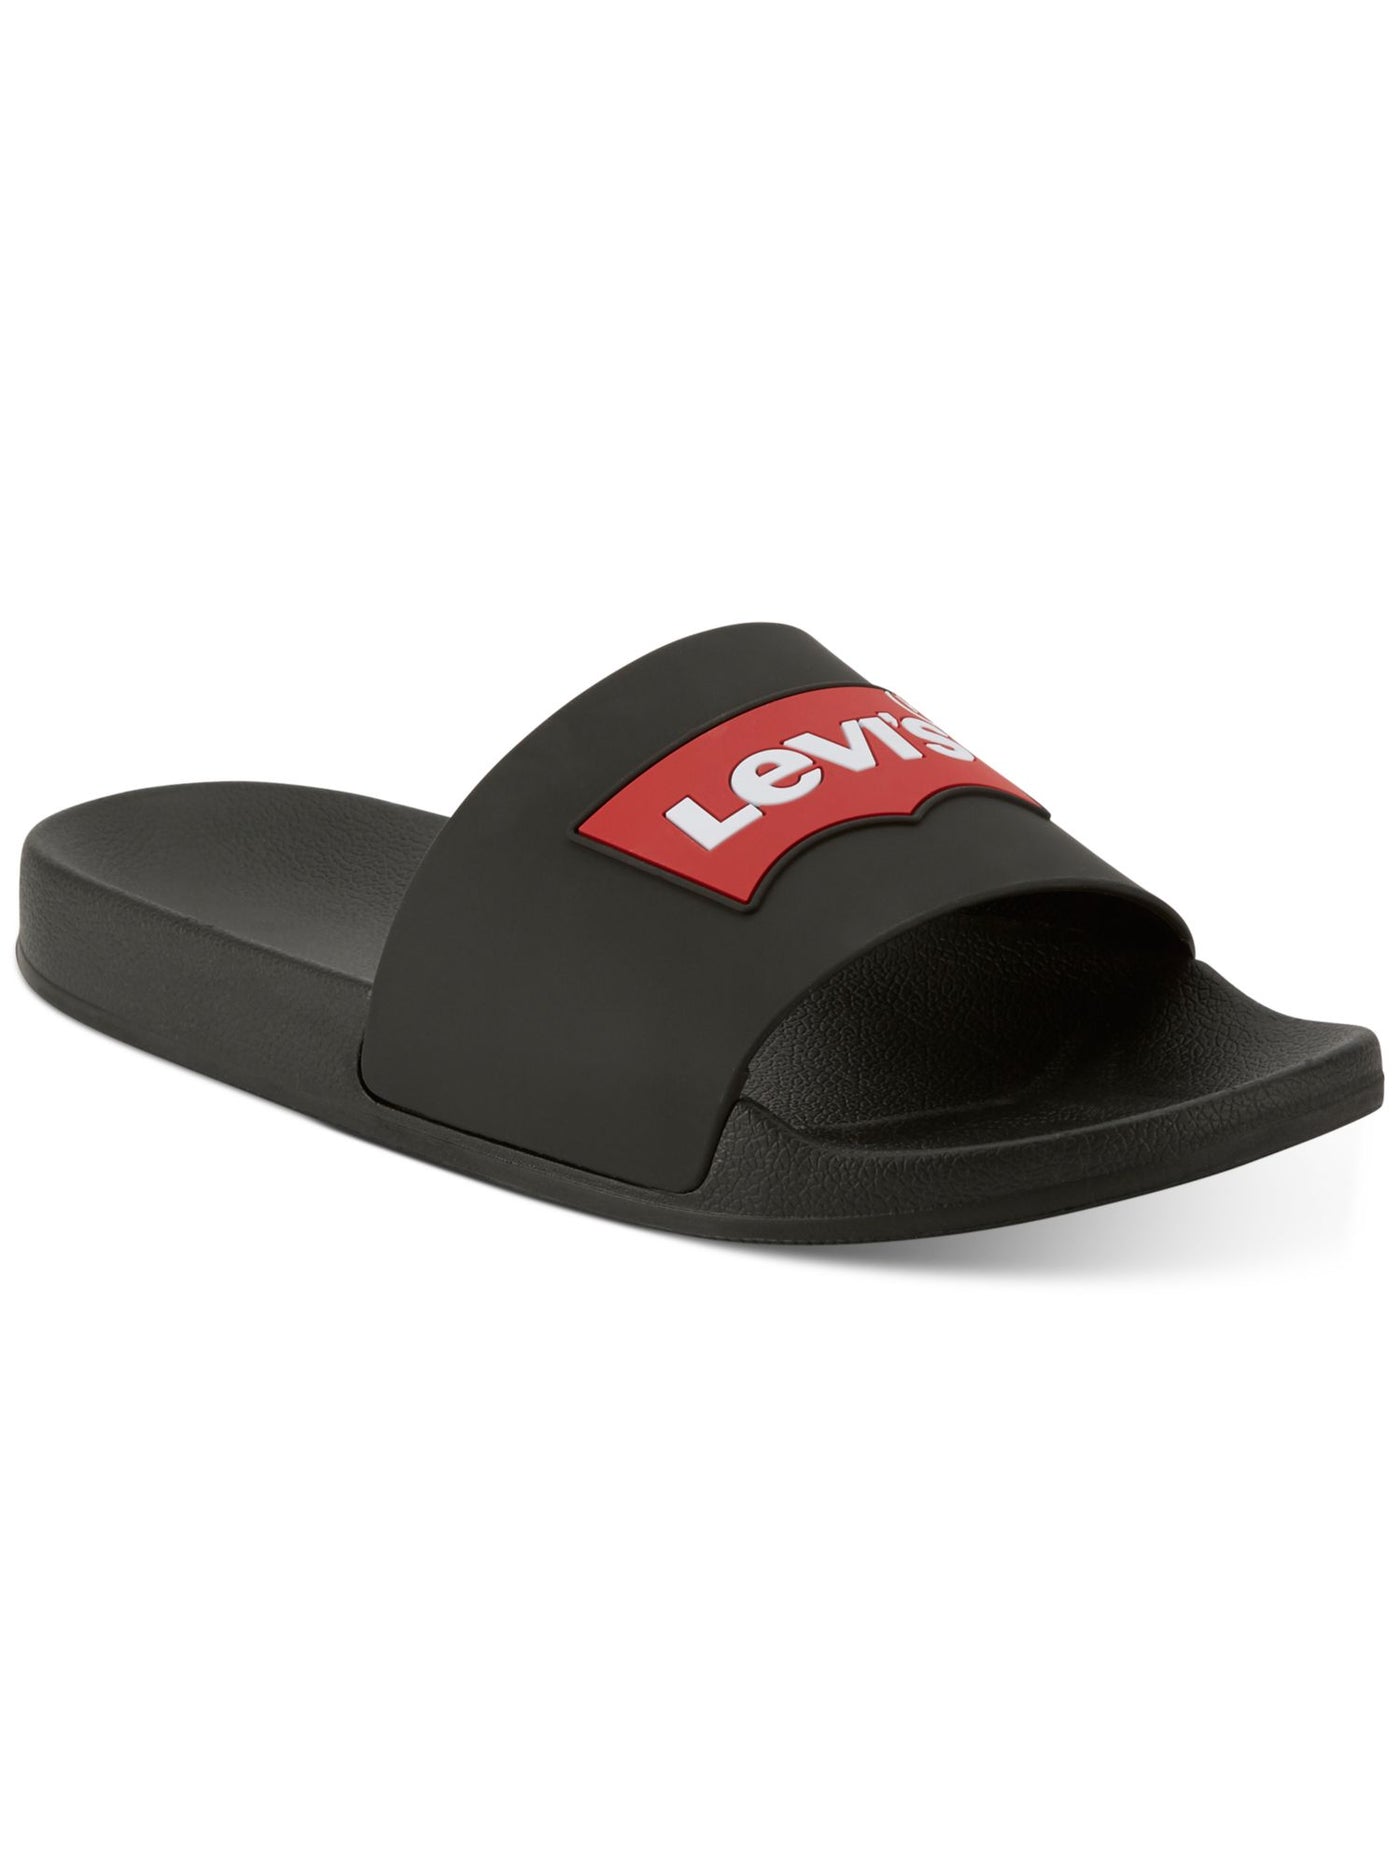 LEVI'S Mens Black Padded Batwing-logo Open Toe Slip On Slide Sandals Shoes 10.5